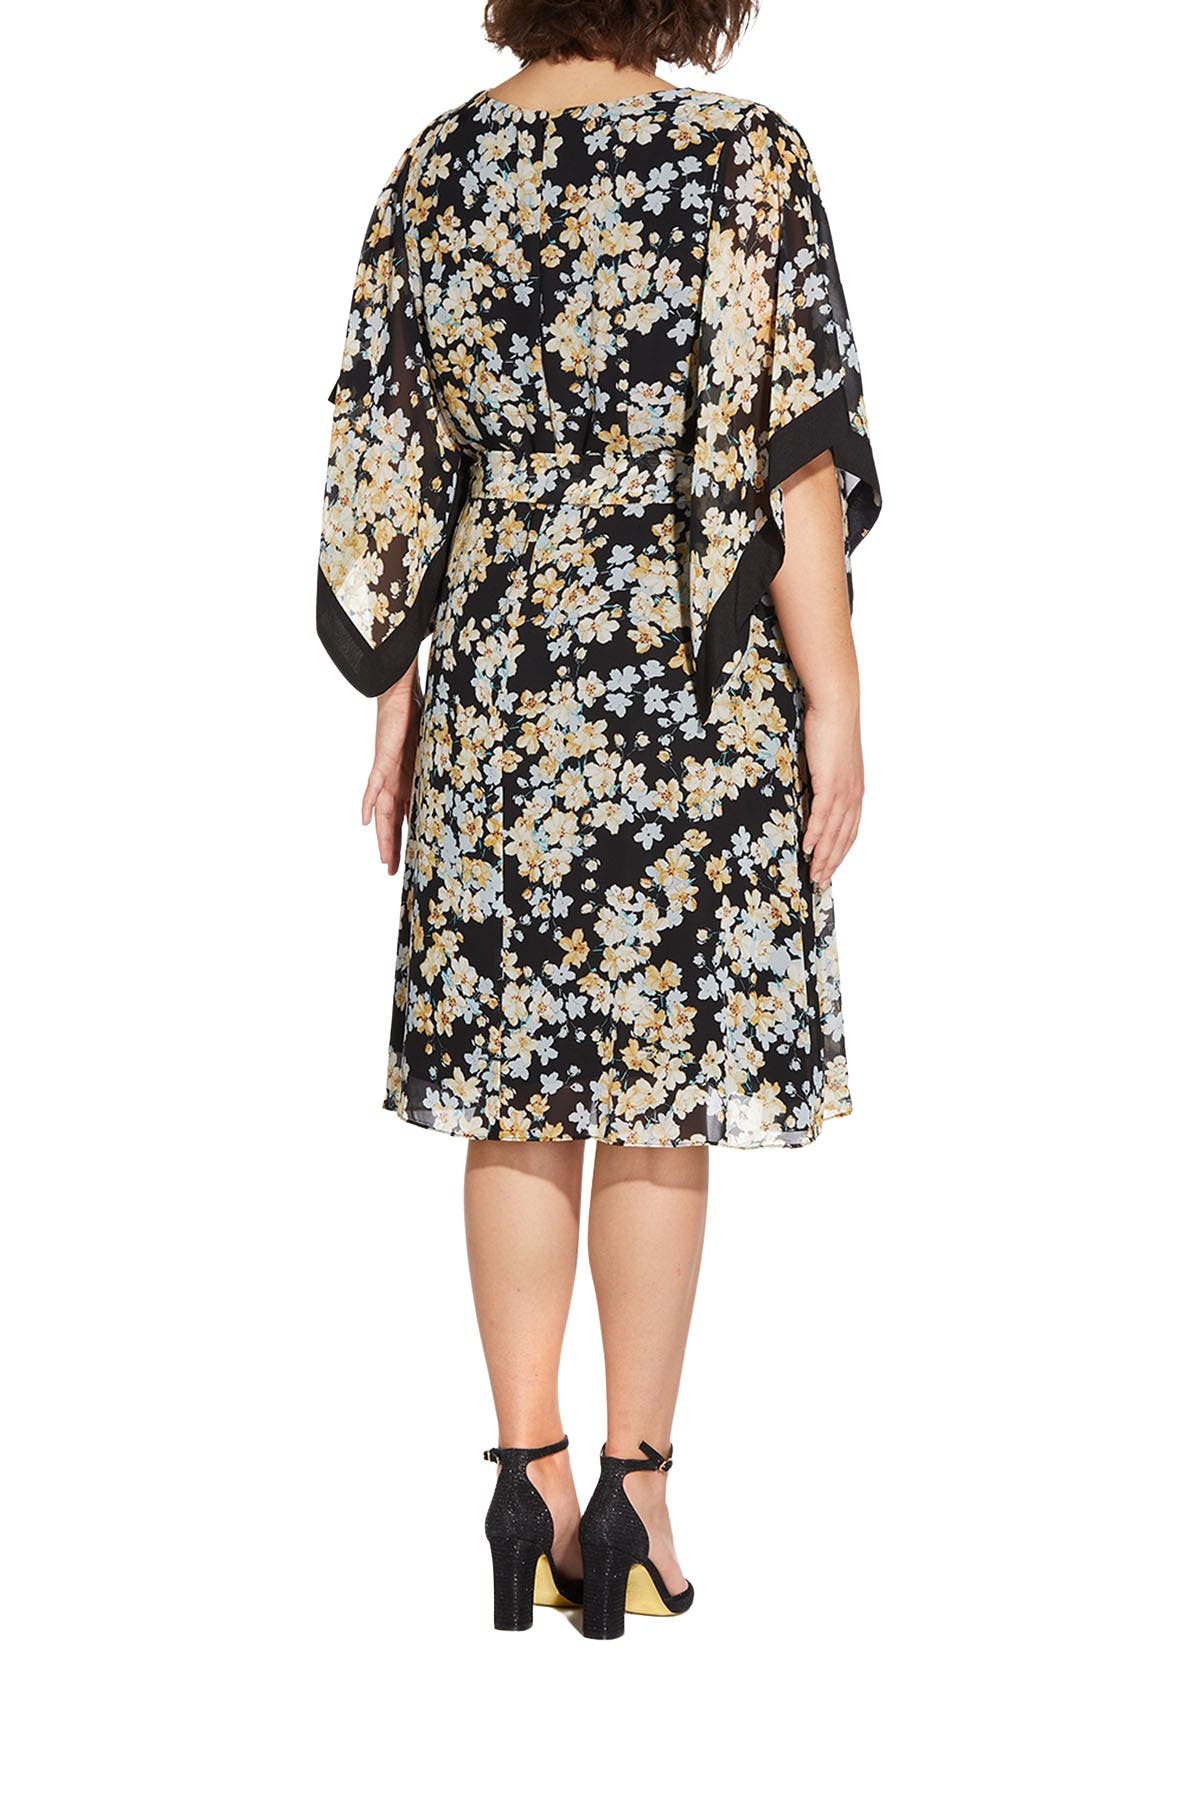 Adrianna Papell Floral Print Kimono Sleeve Dress In Open Miscellaneous3